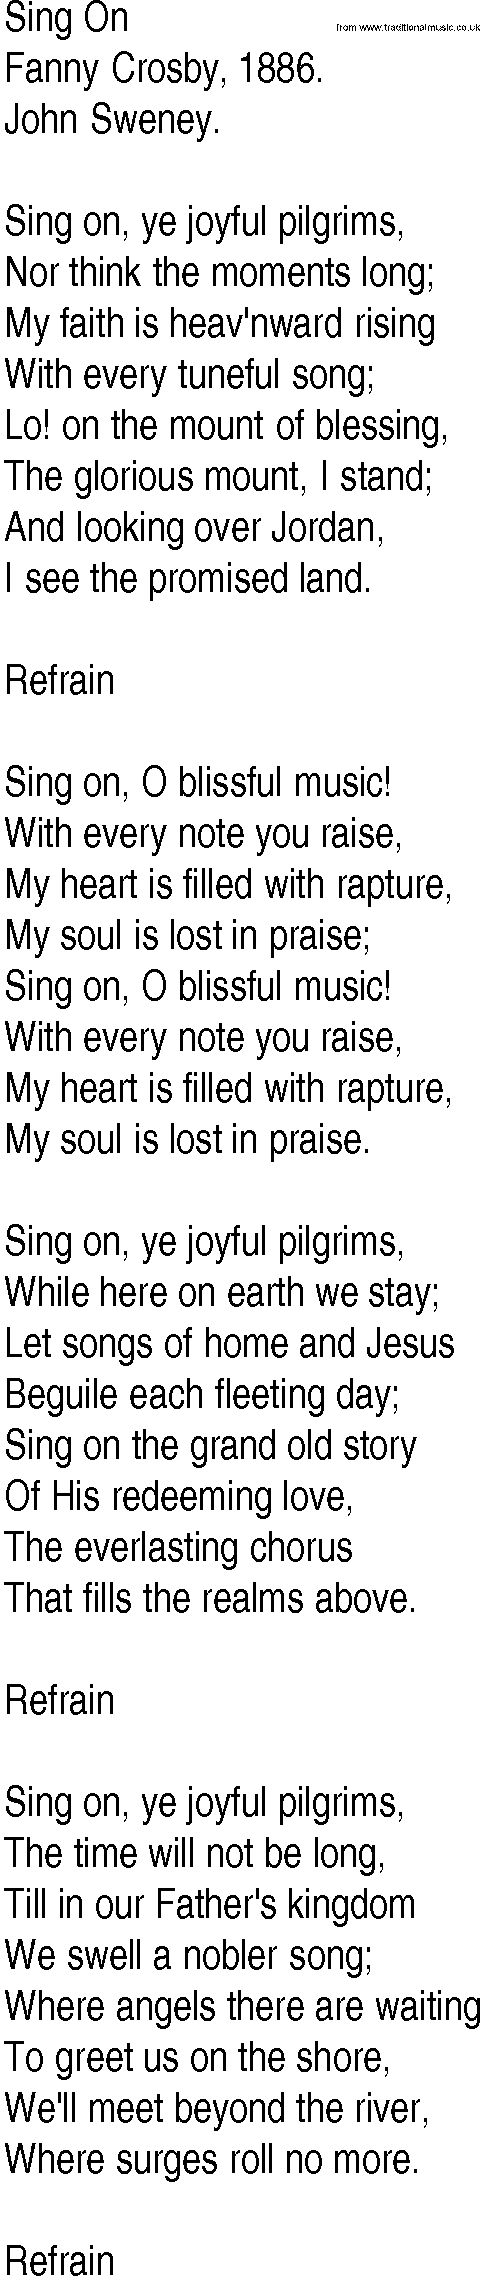 Hymn and Gospel Song: Sing On by Fanny Crosby lyrics